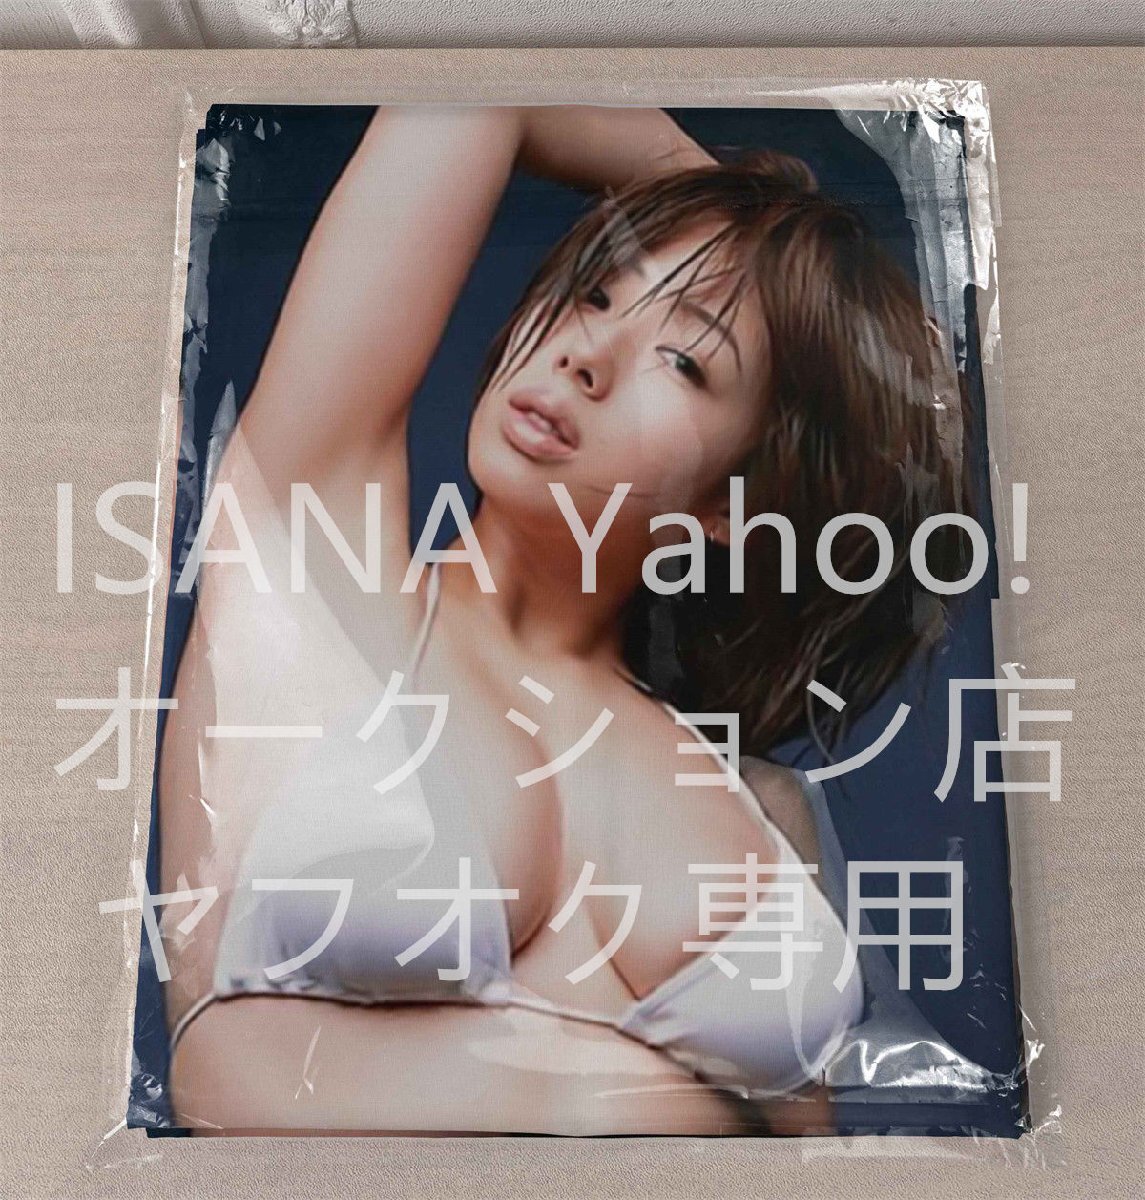 1 иен старт / Inoue Waka /90cm×45cm/2way tricot / Dakimakura покрытие 